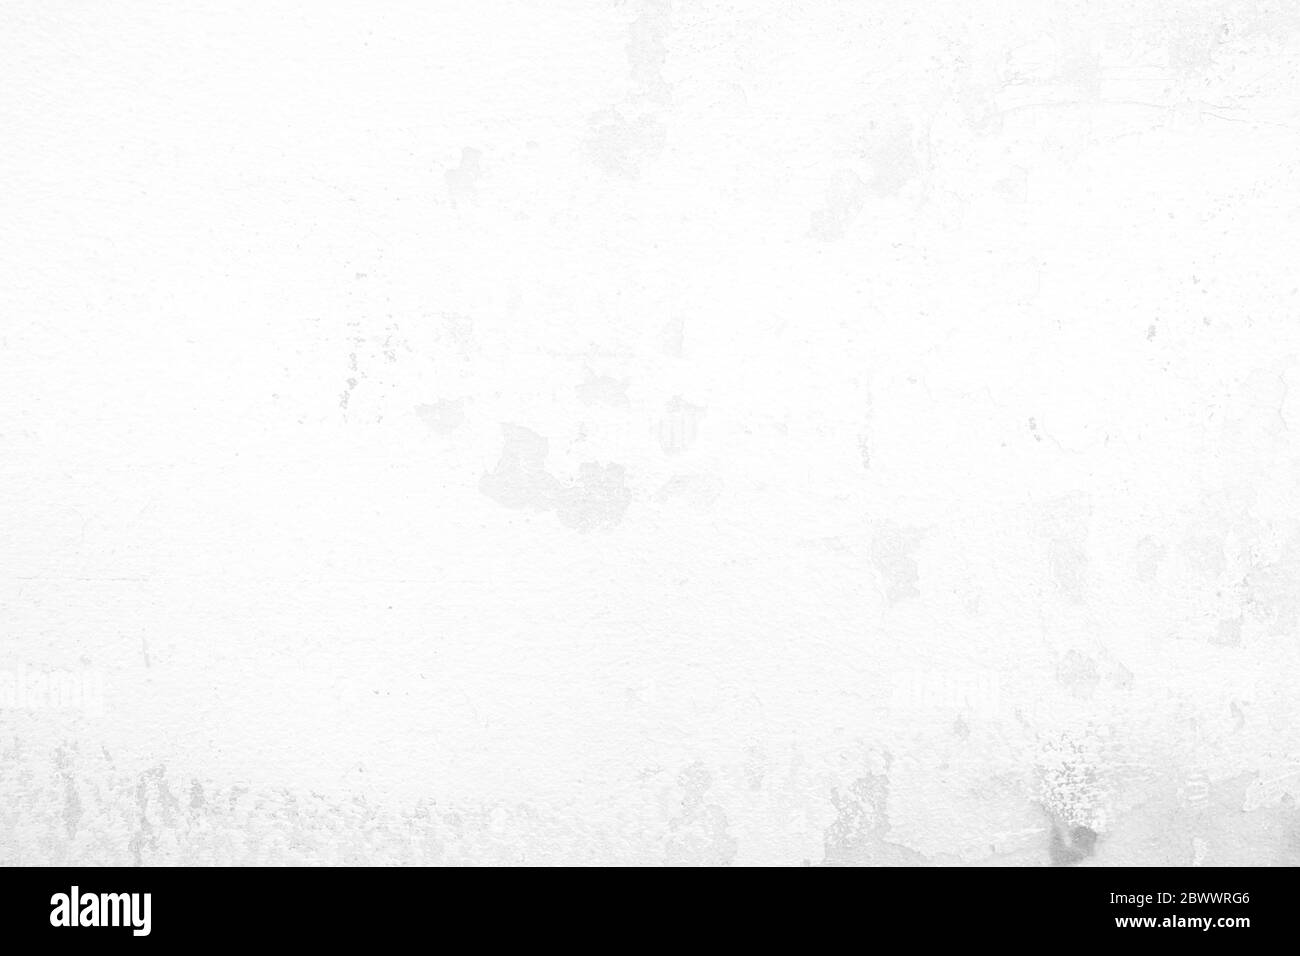 White Grunge Concrete Wall Texture Background. Stock Photo